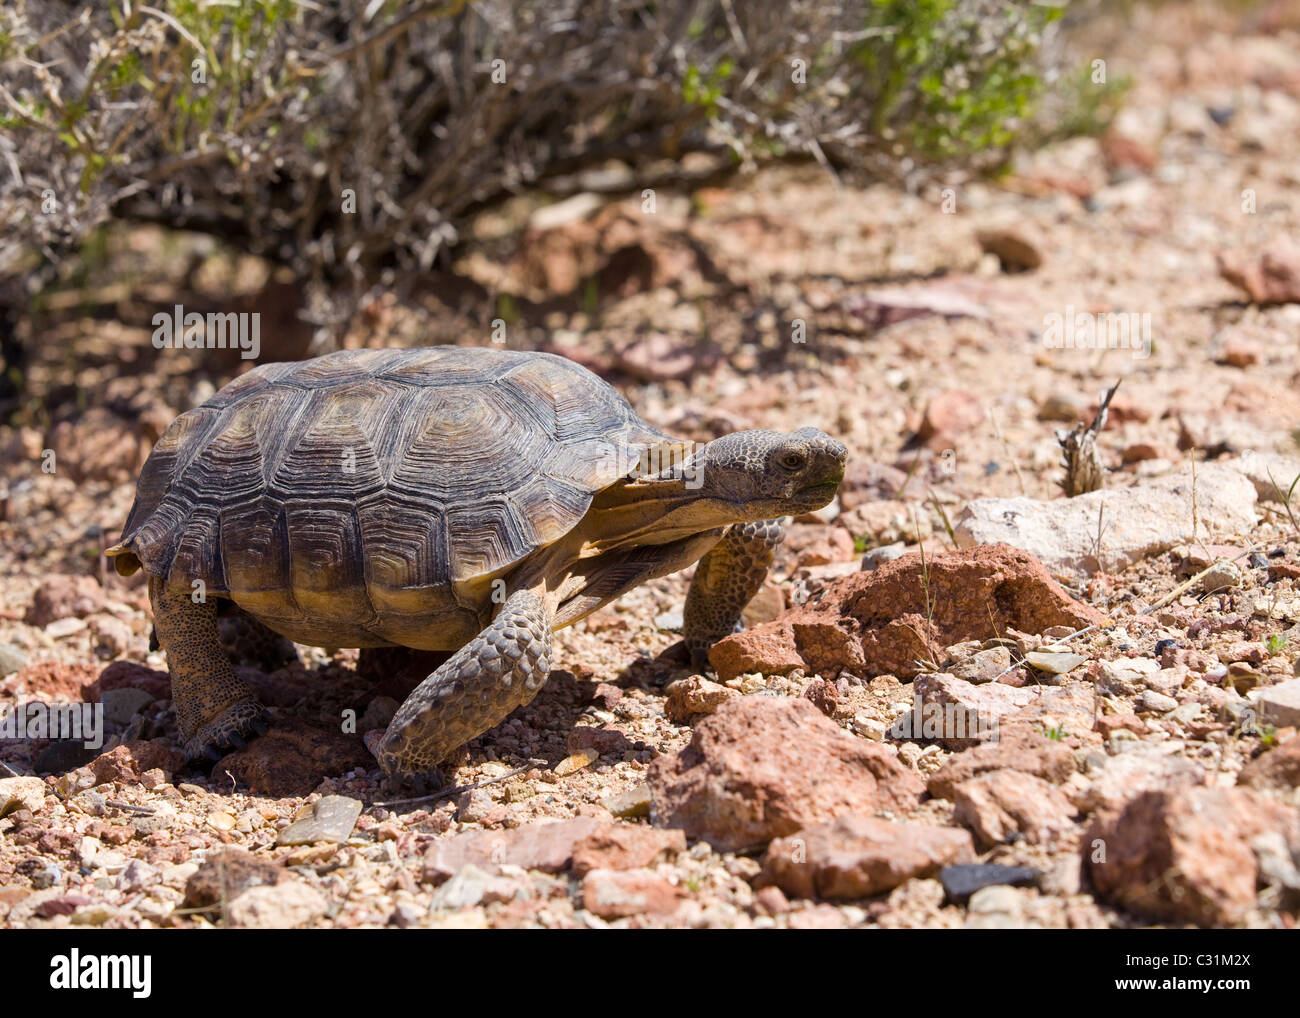 Deserto Mojave tartaruga (Gopherus agassizii) nel suo habitat naturale - Mojave, California USA Foto Stock